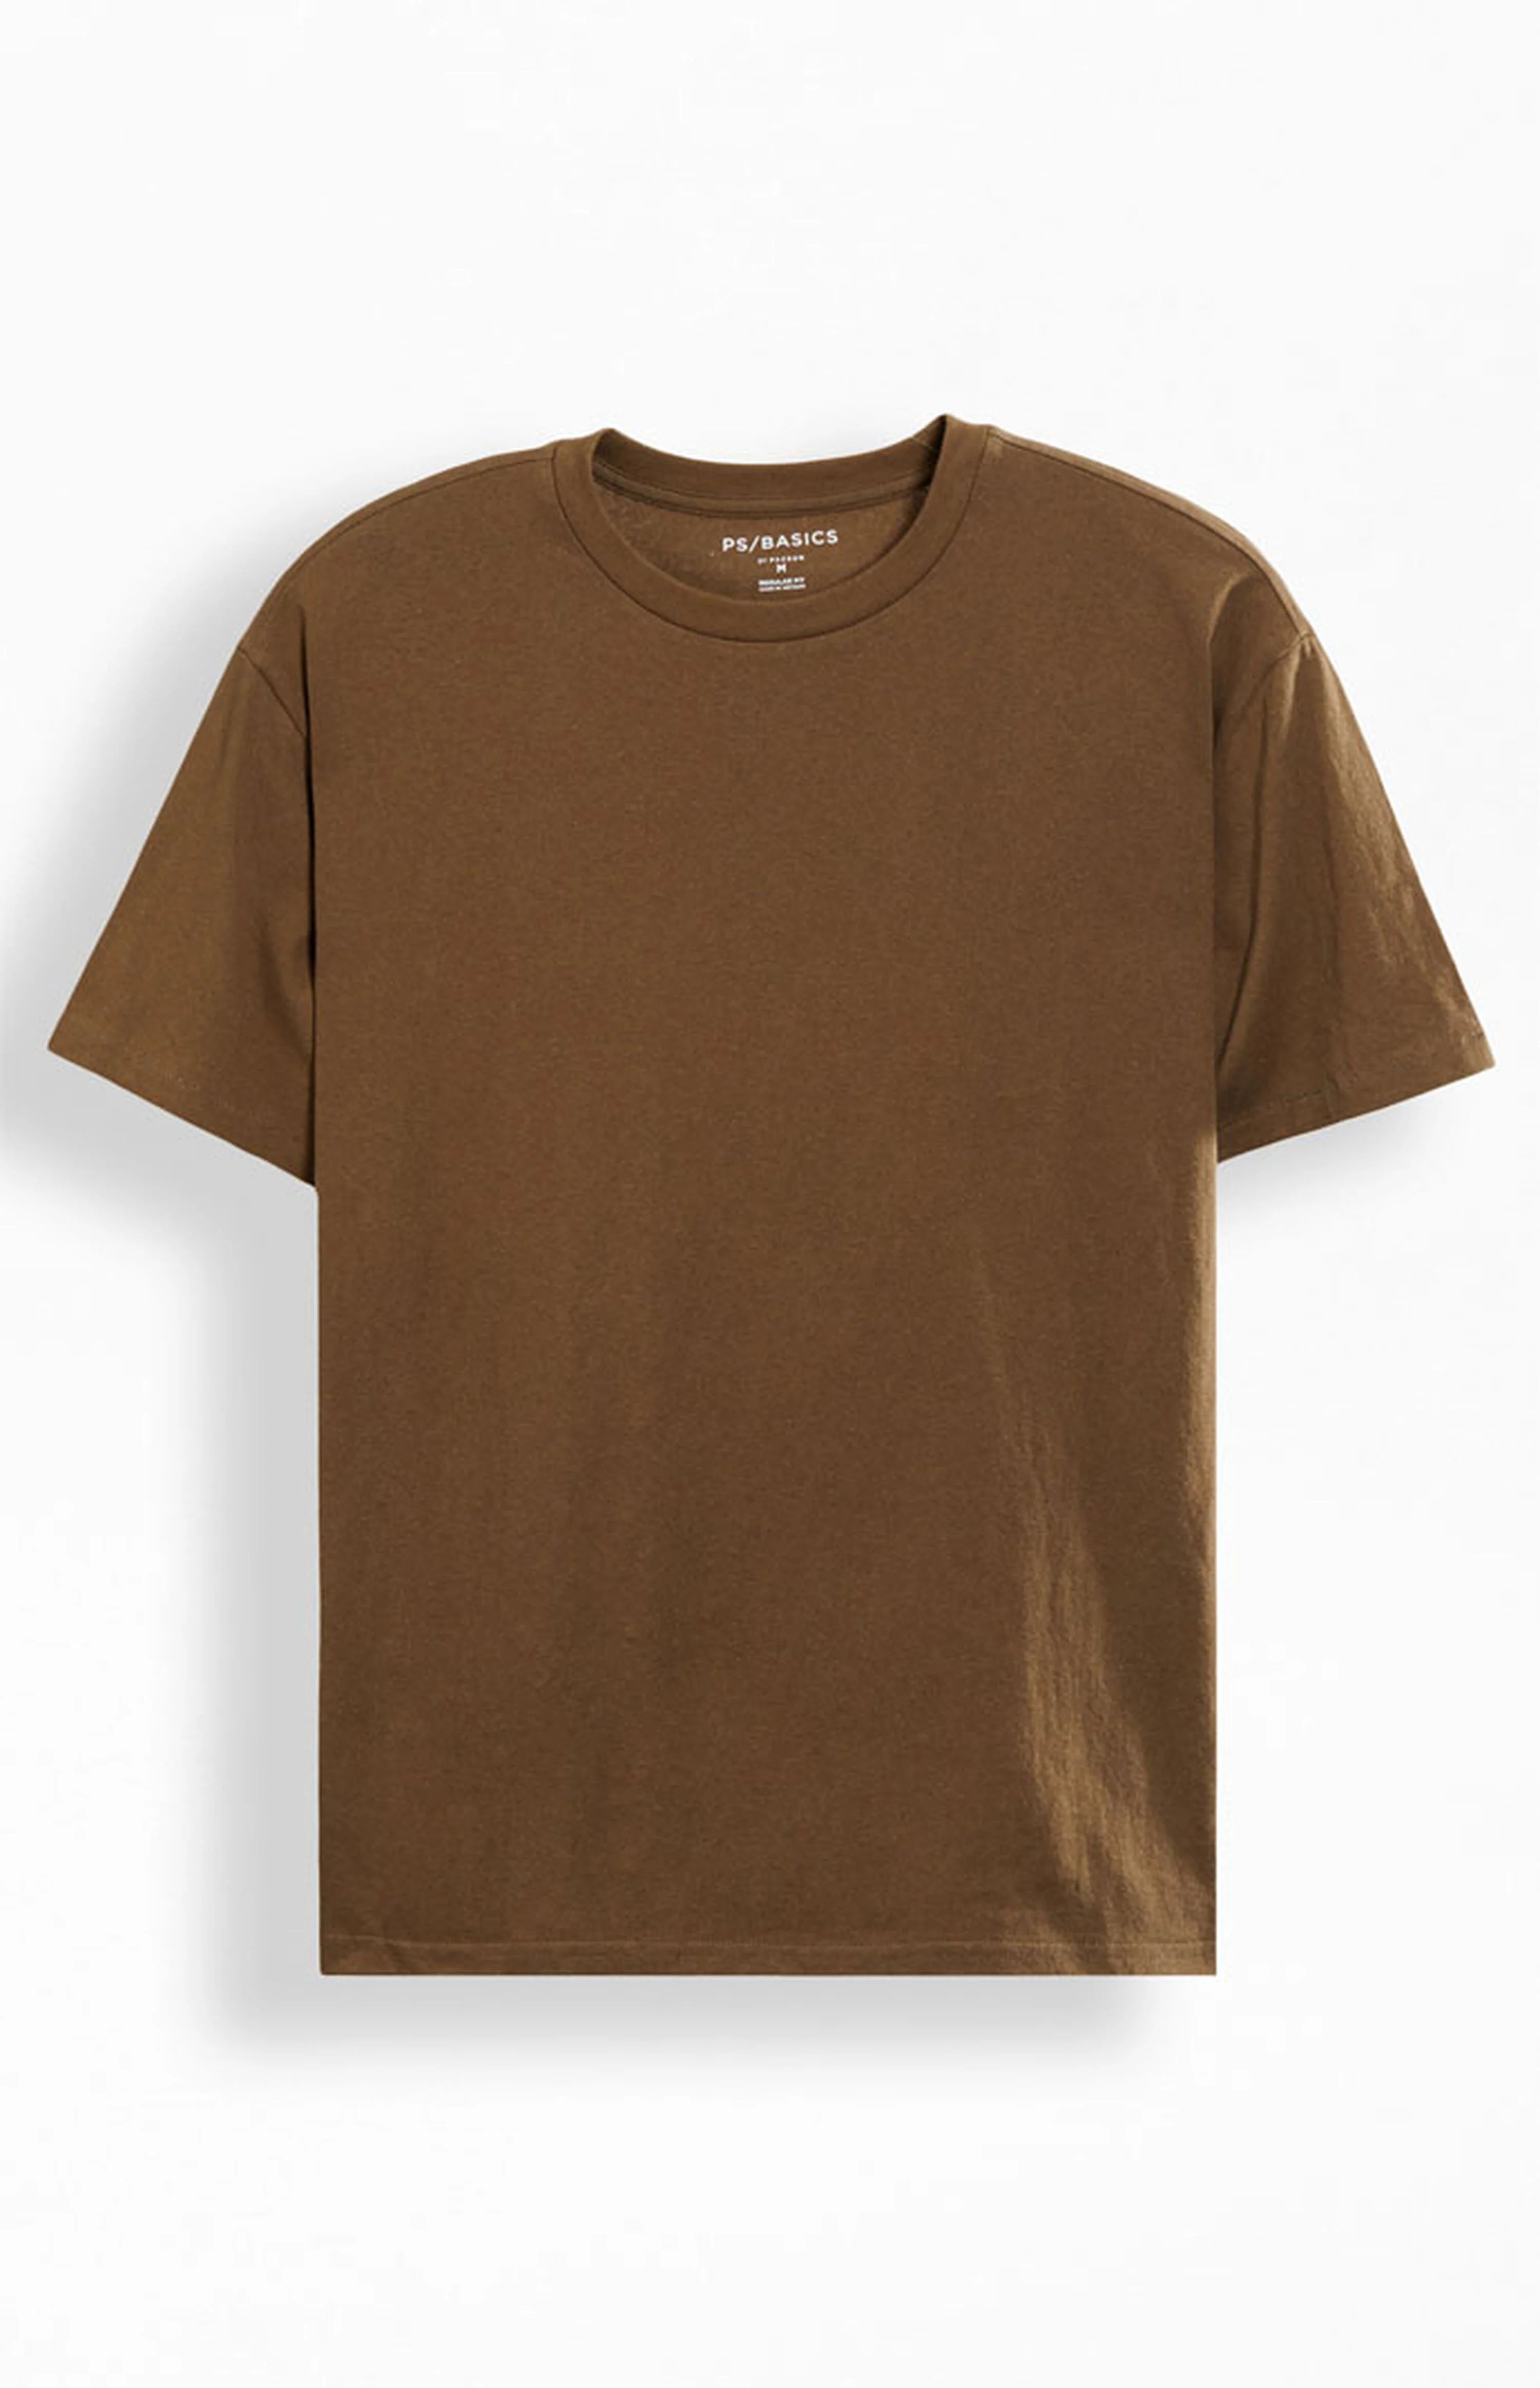 PS Basics Brown Reece Regular T-Shirt | PacSun